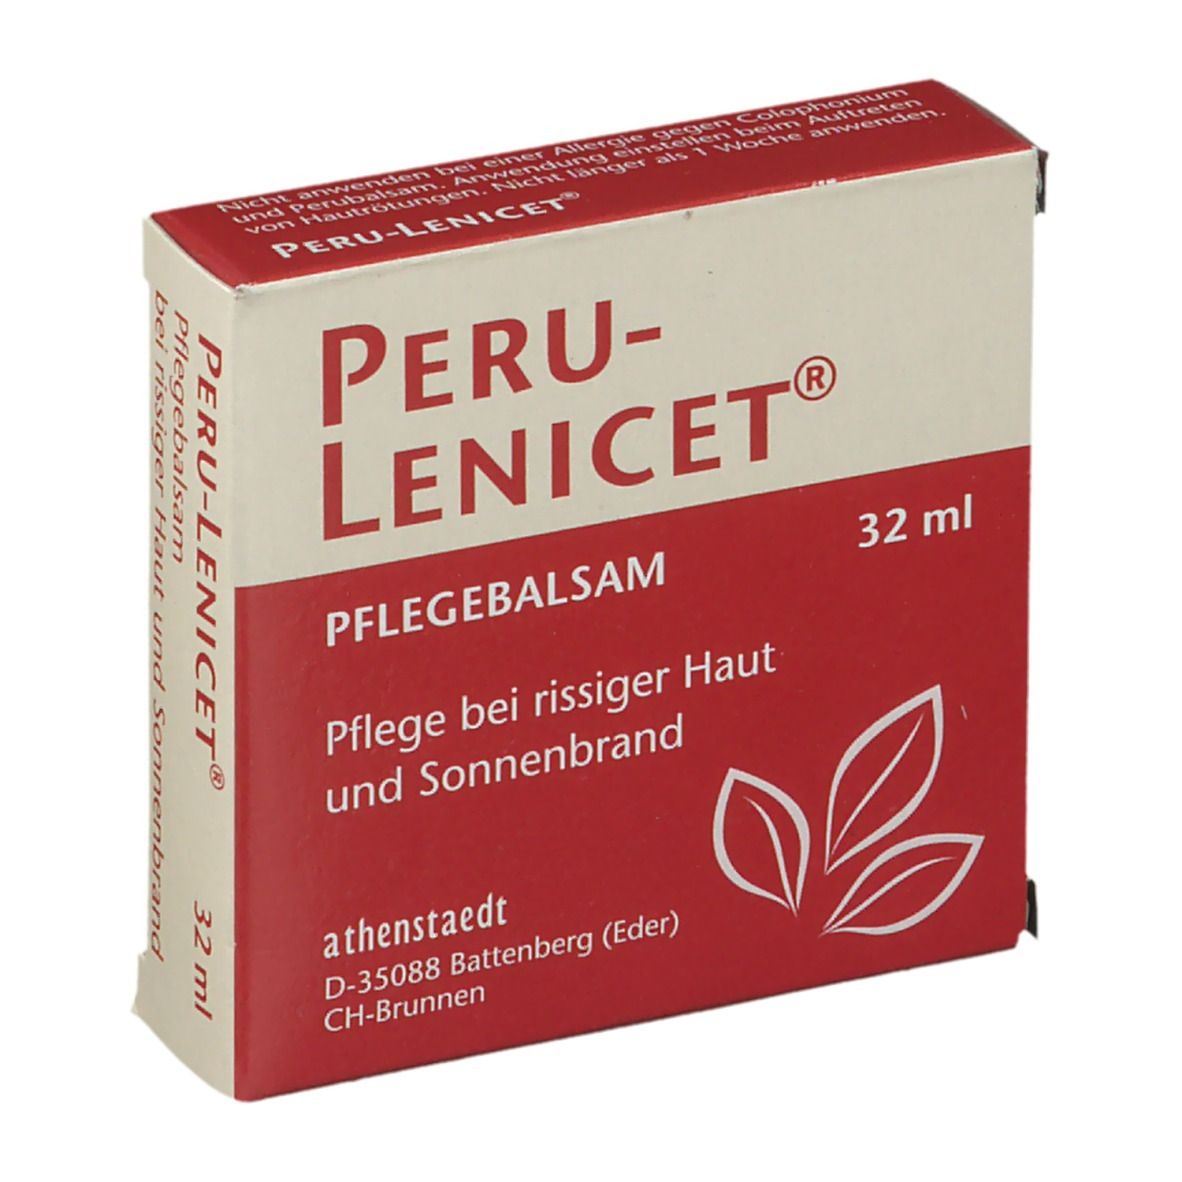 Image of Peru-Lenicet® Pflegesalbe